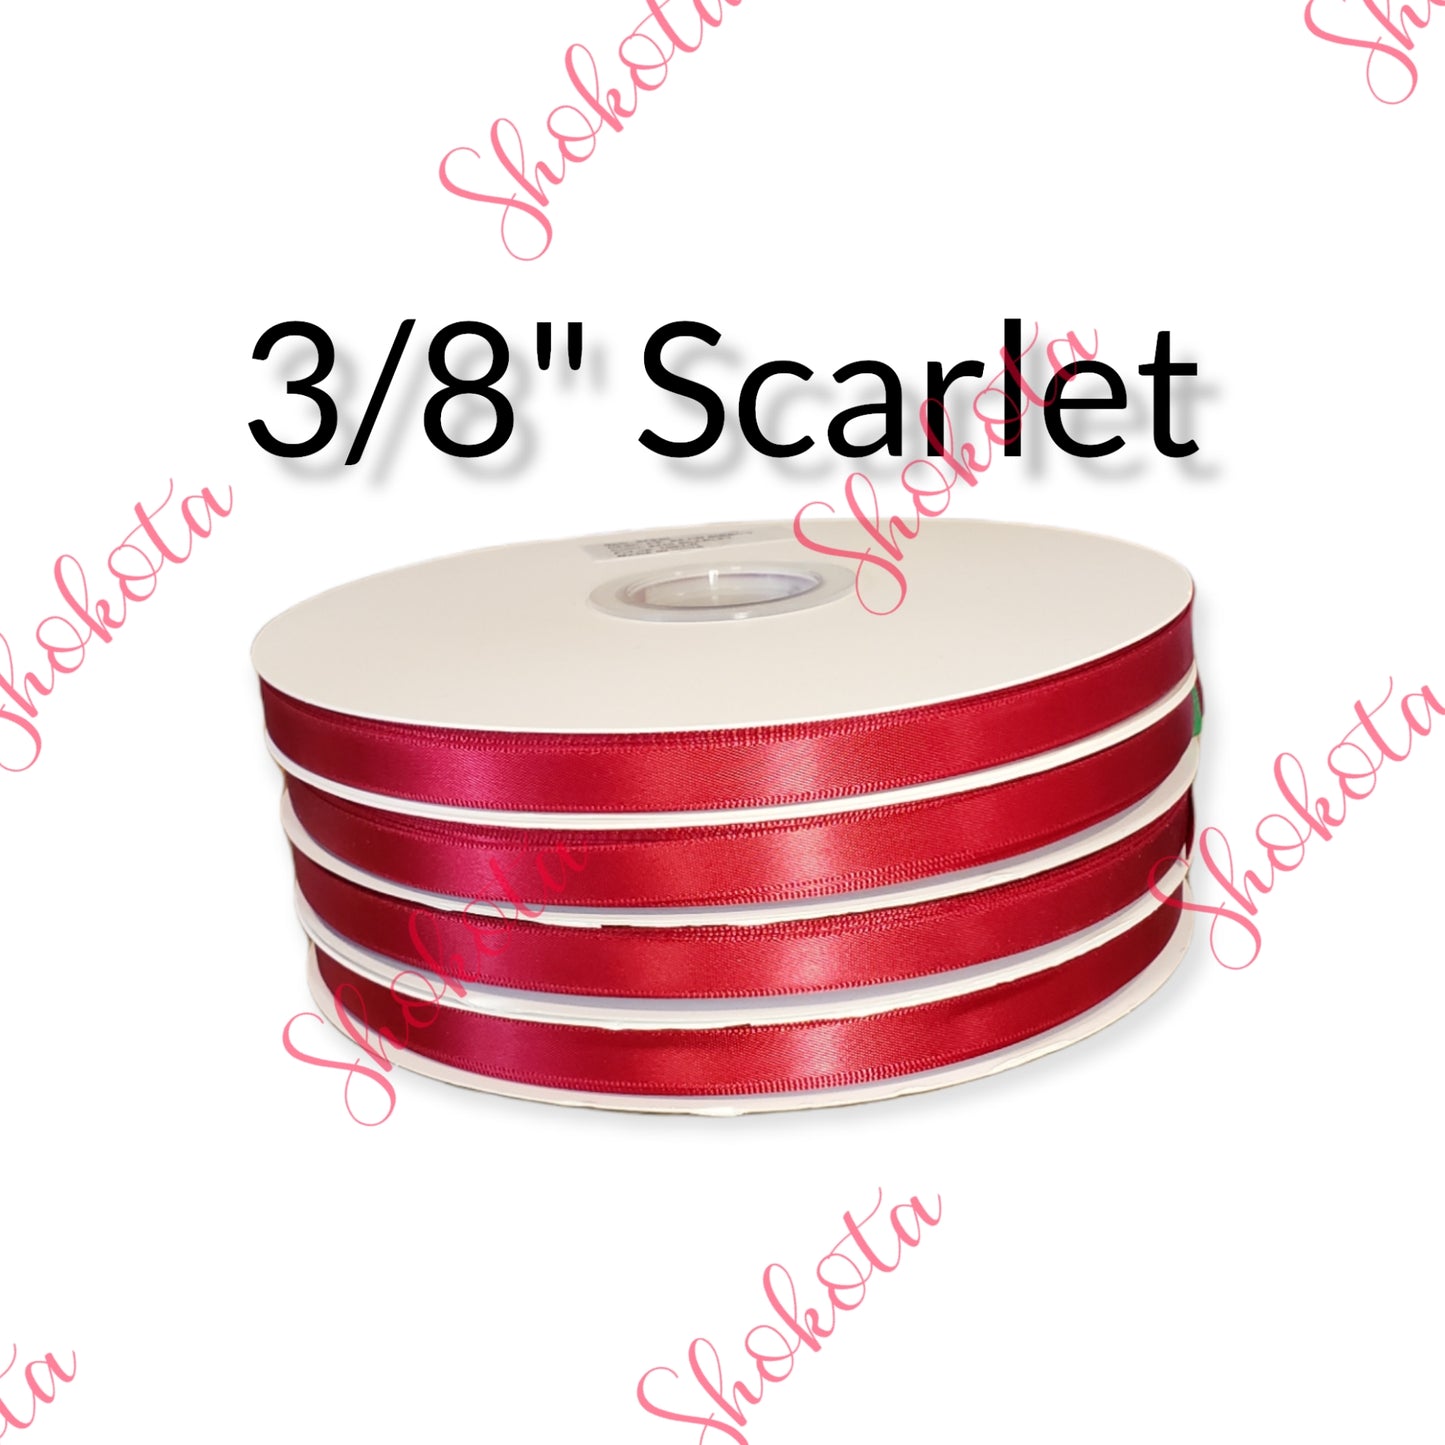 3/8" Scarlet Satin Ribbon